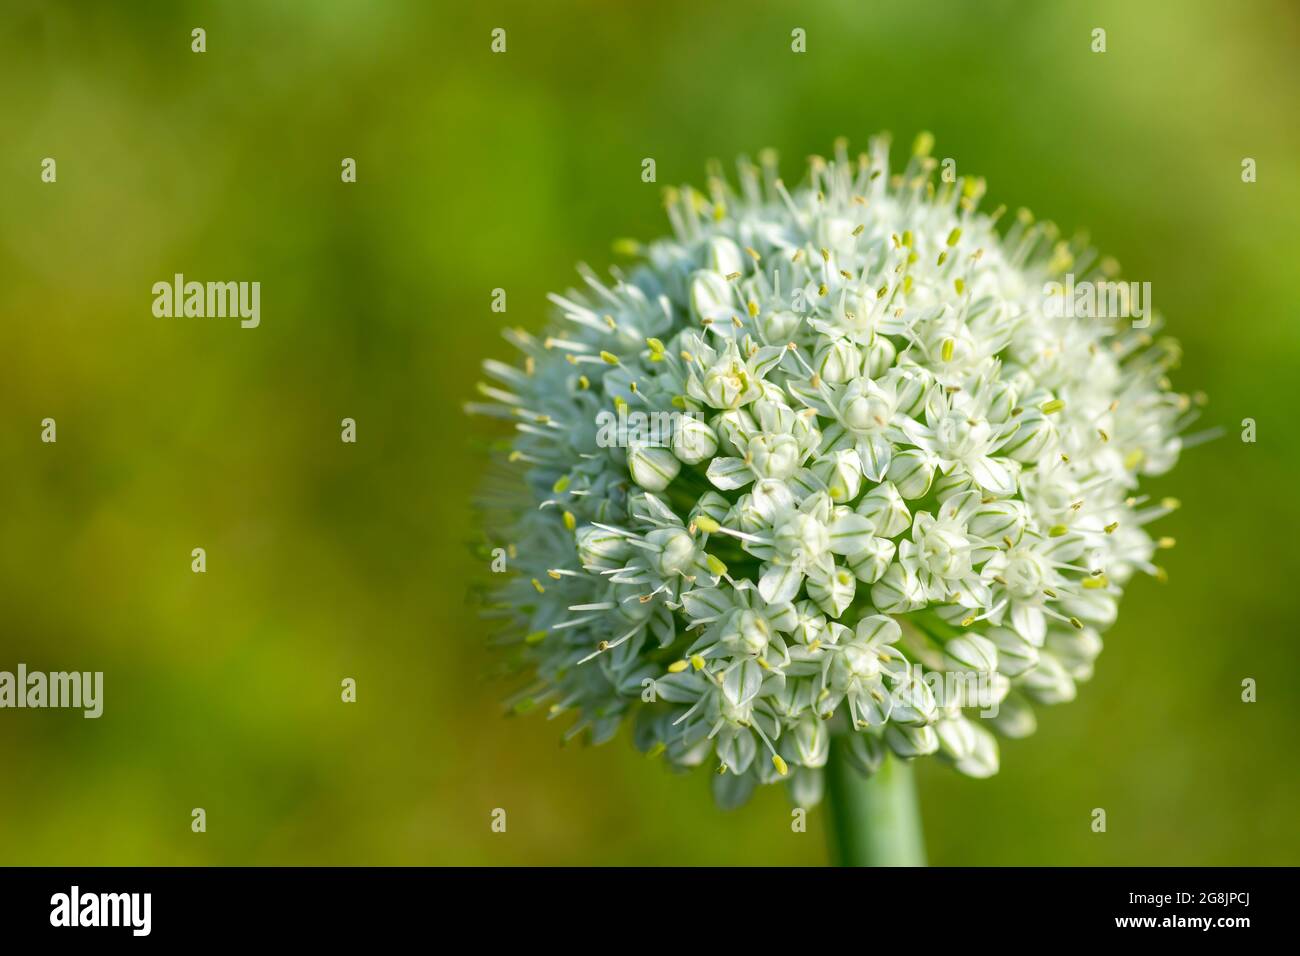 White inflorescence of an onion (Allium cepa) on soid green background Stock Photo